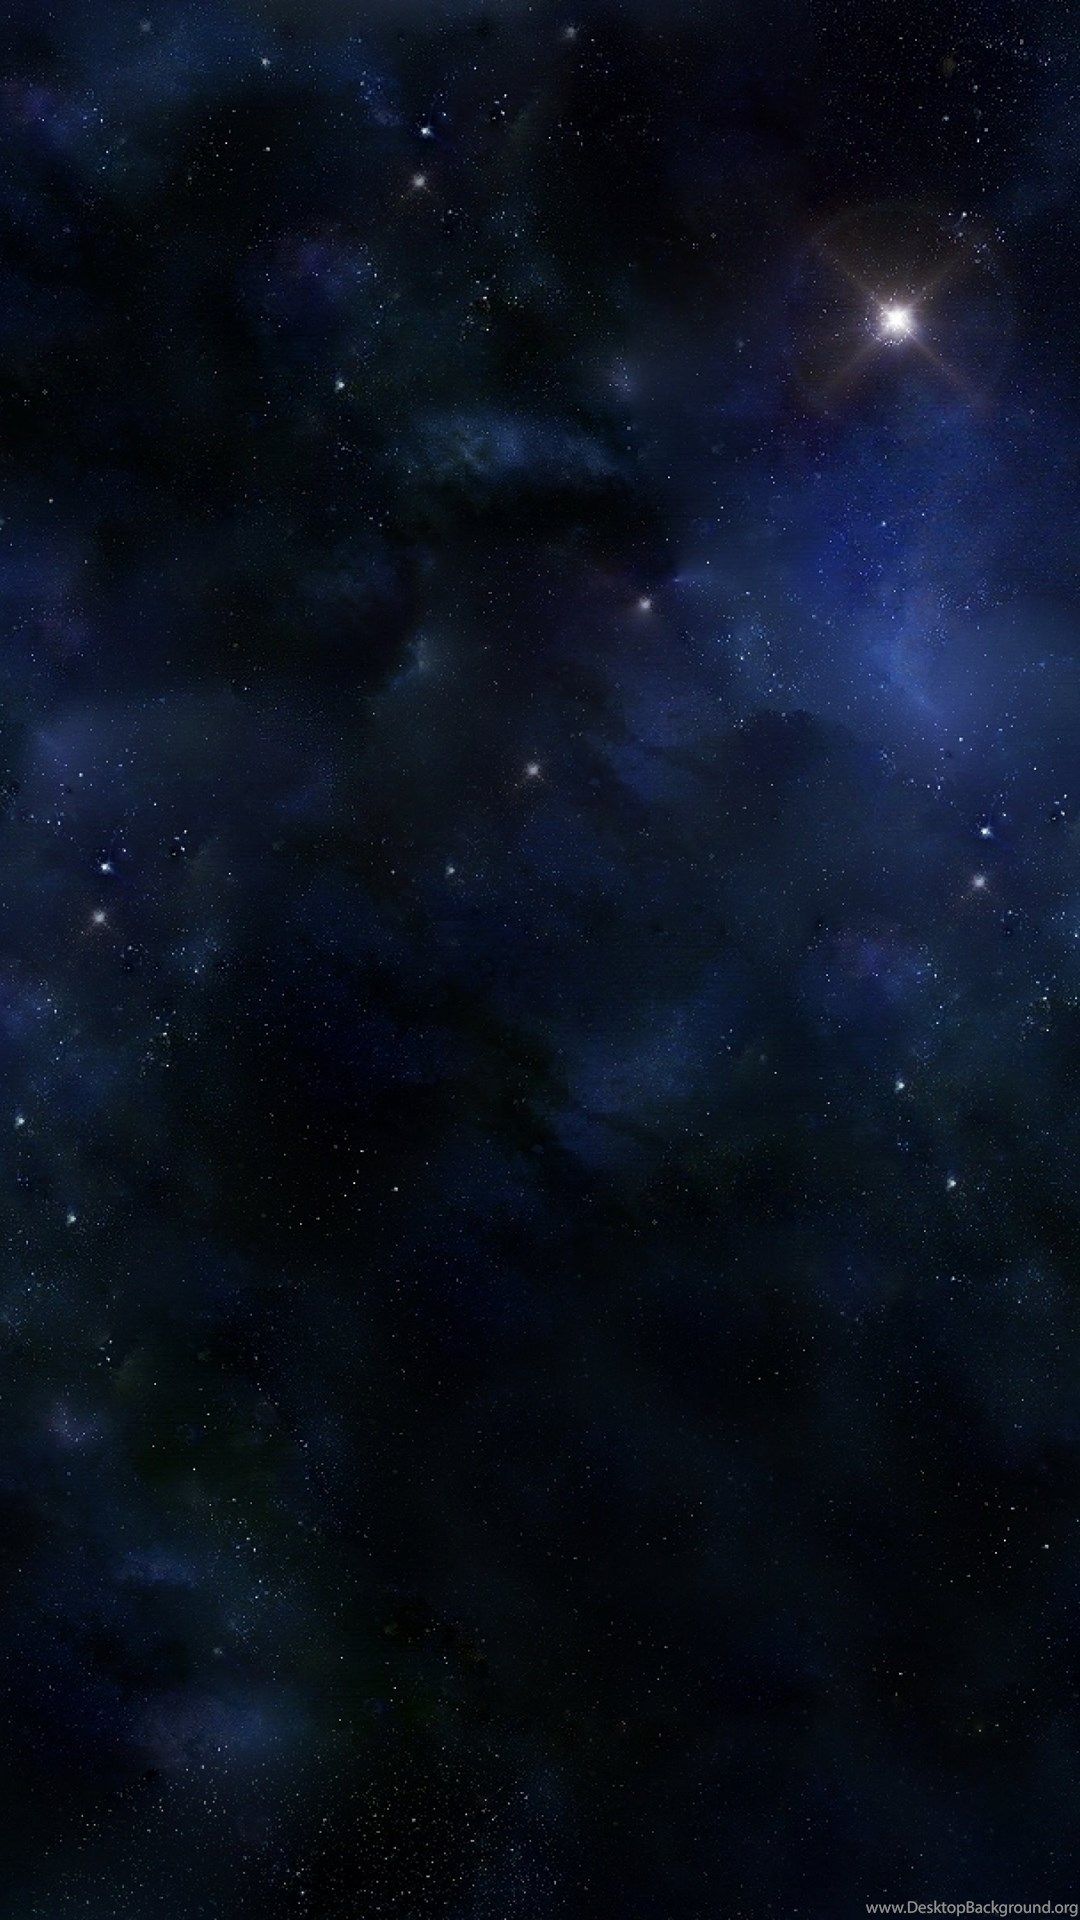 Download Wallpaper 3840x2400 Sky, Stars, Light, Dark Ultra HD 4K. Desktop Background